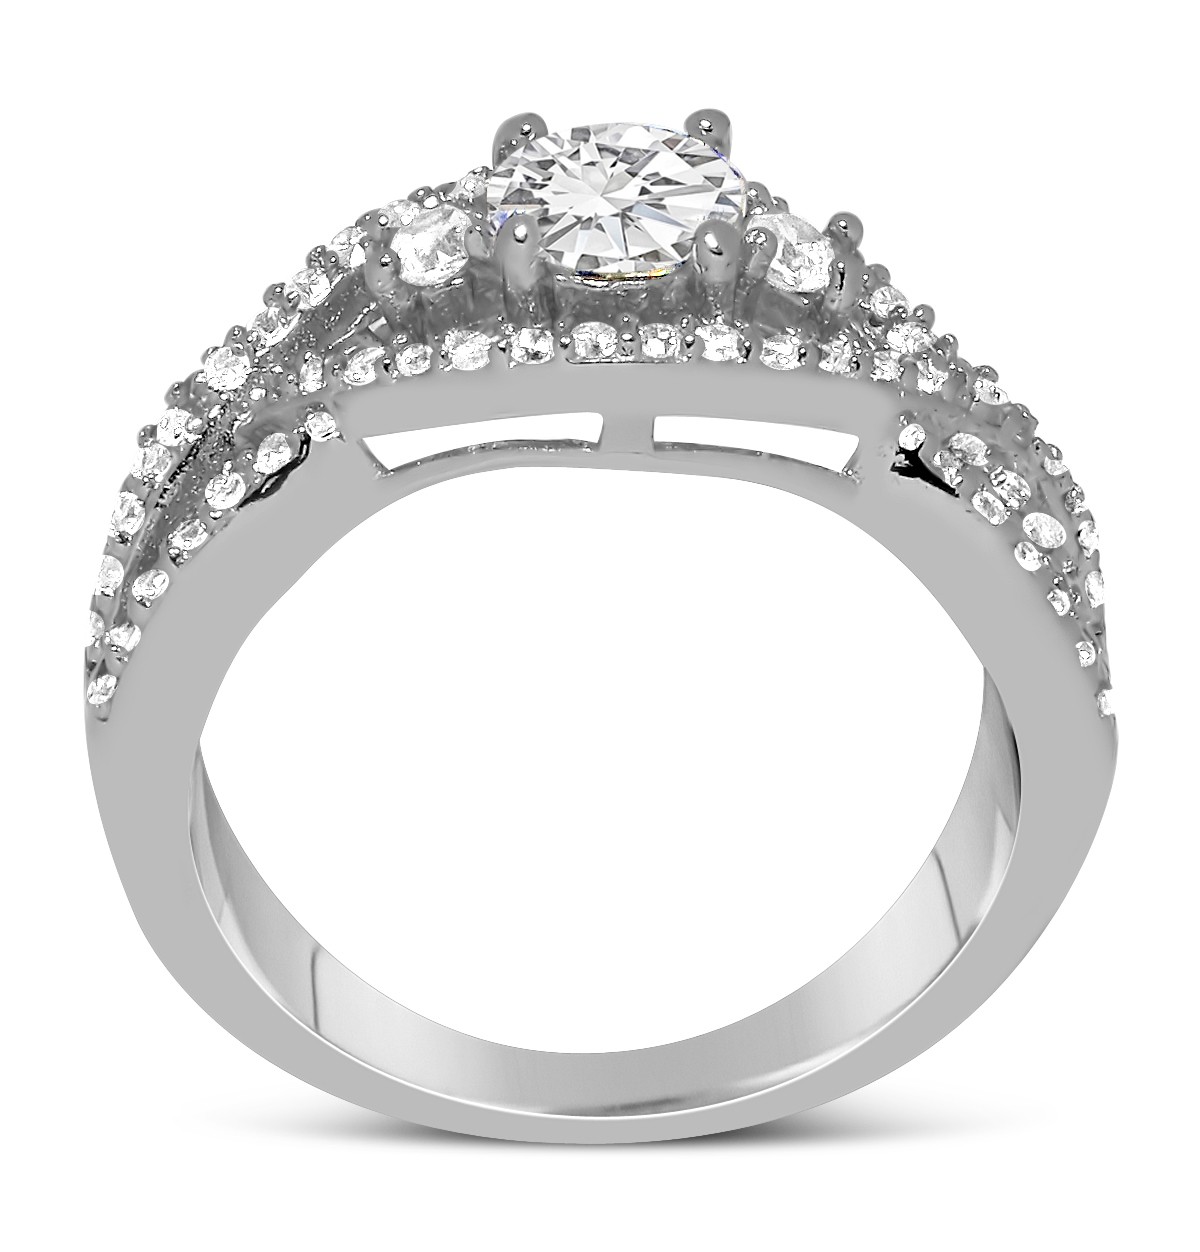 Perfect Designer 1 carat Round Diamond Engagement Ring for Women in